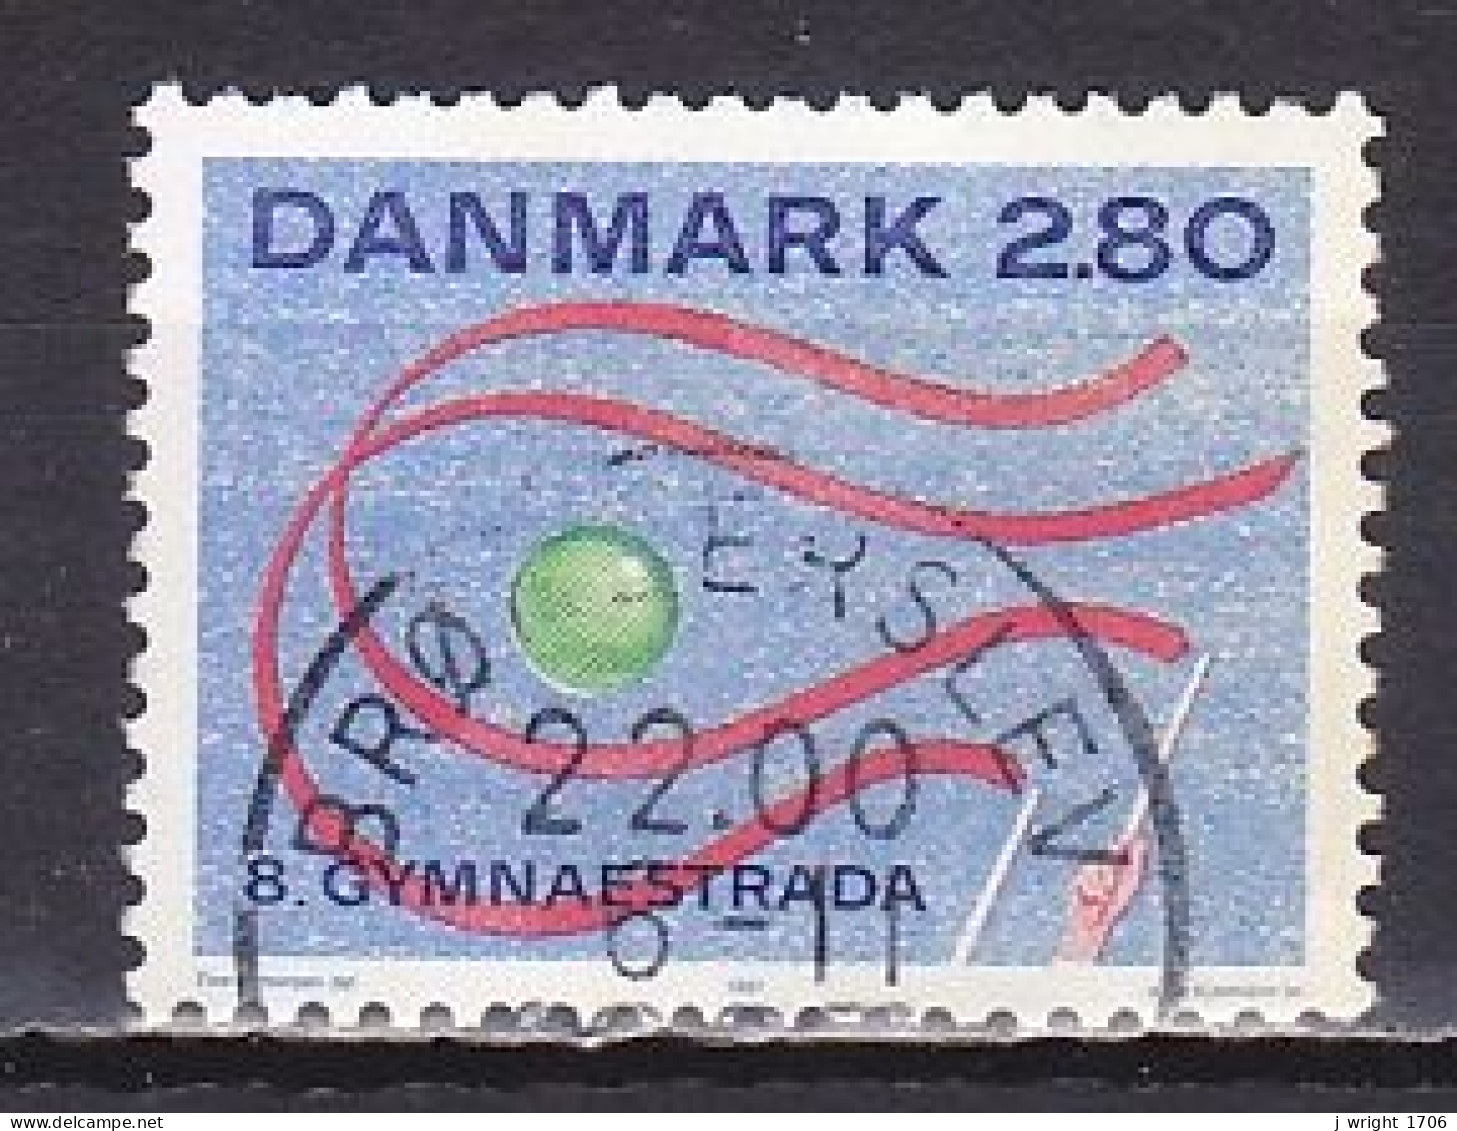 Denmark, 1987, World Gymnaestrada, 2.80kr, USED - Gebraucht